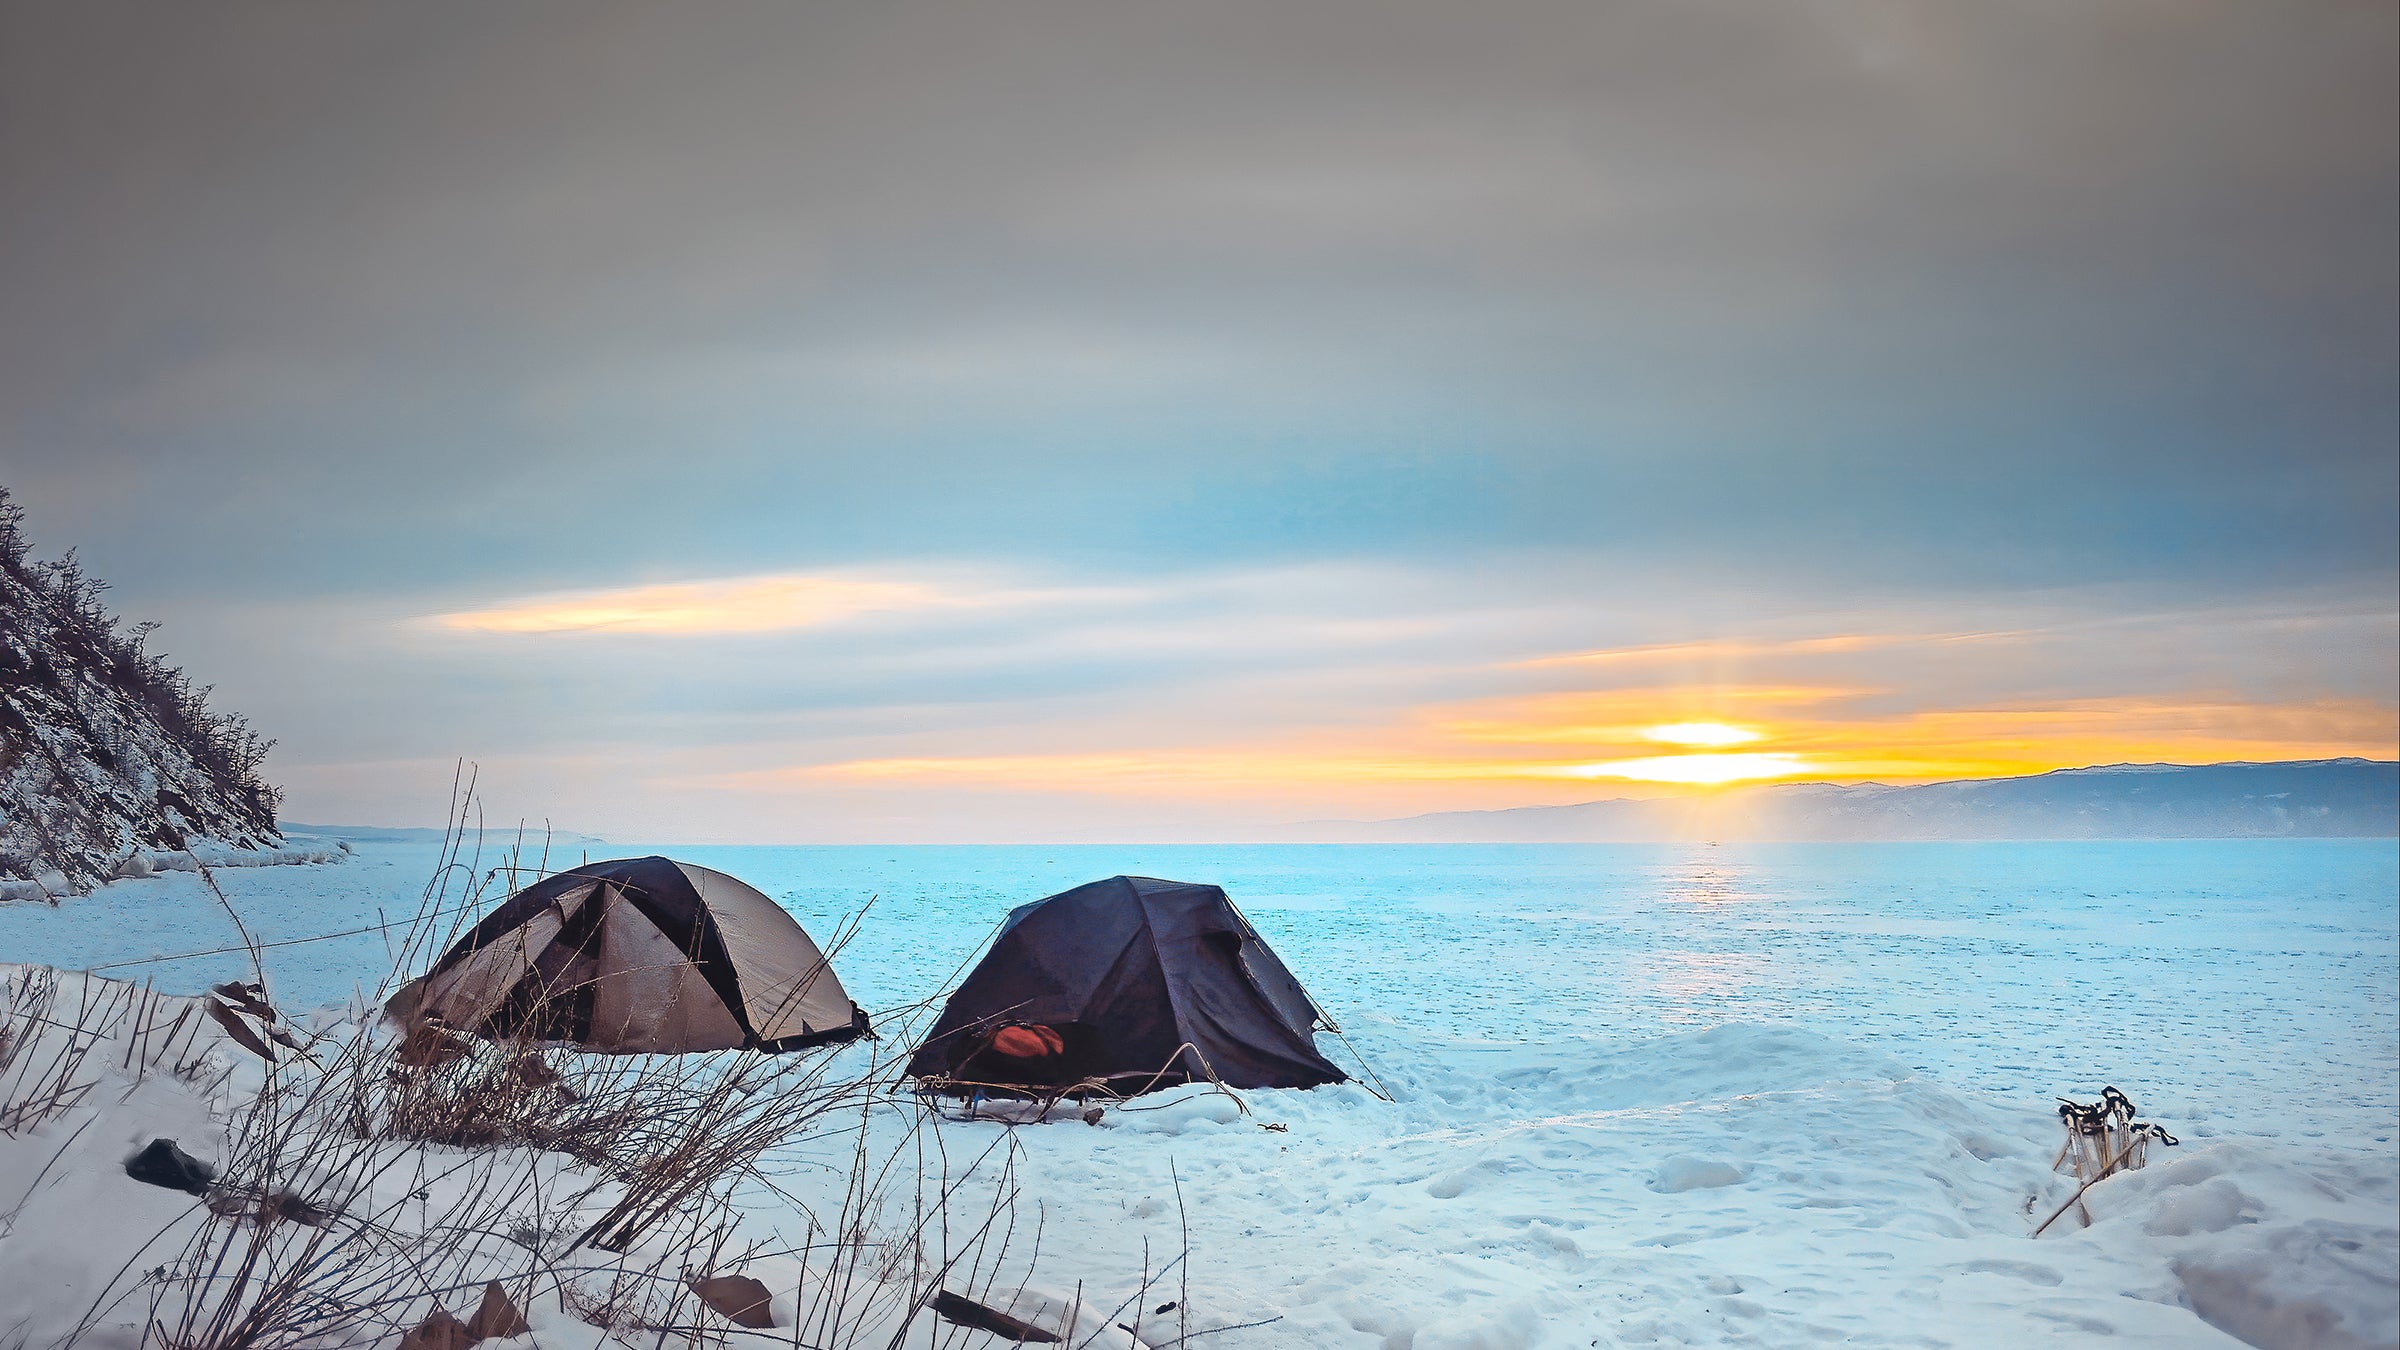 Winter Camping Essential Gear Checklist